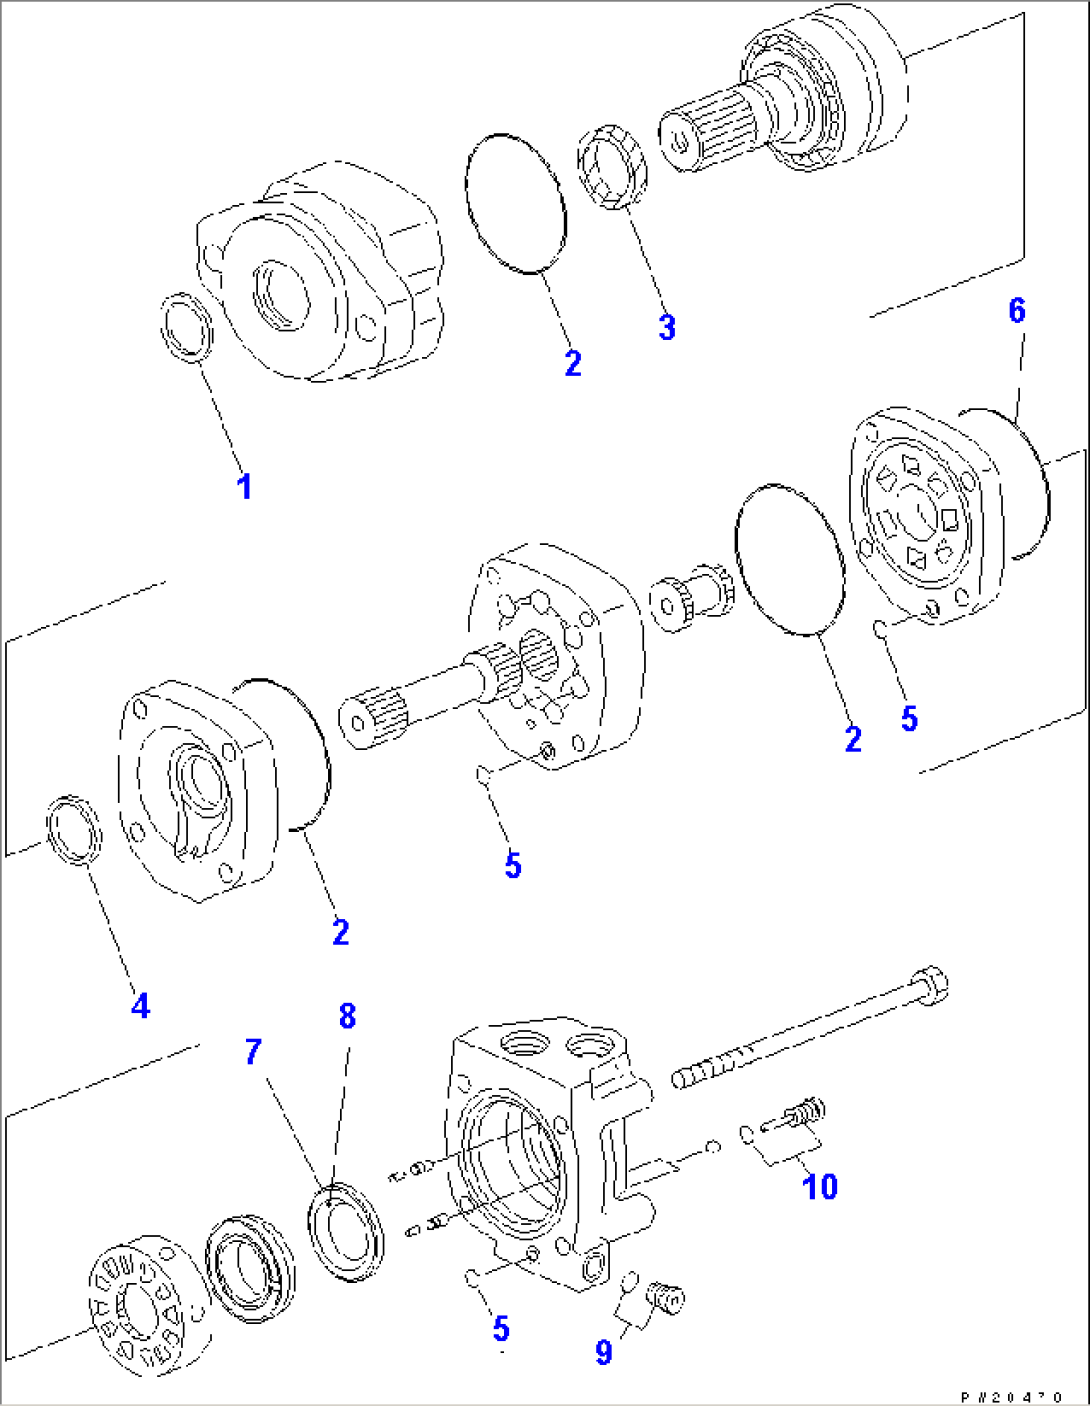 CONVEYOR MOTOR (2-290AS2S-E3342 TYPE) (INNER PARTS)